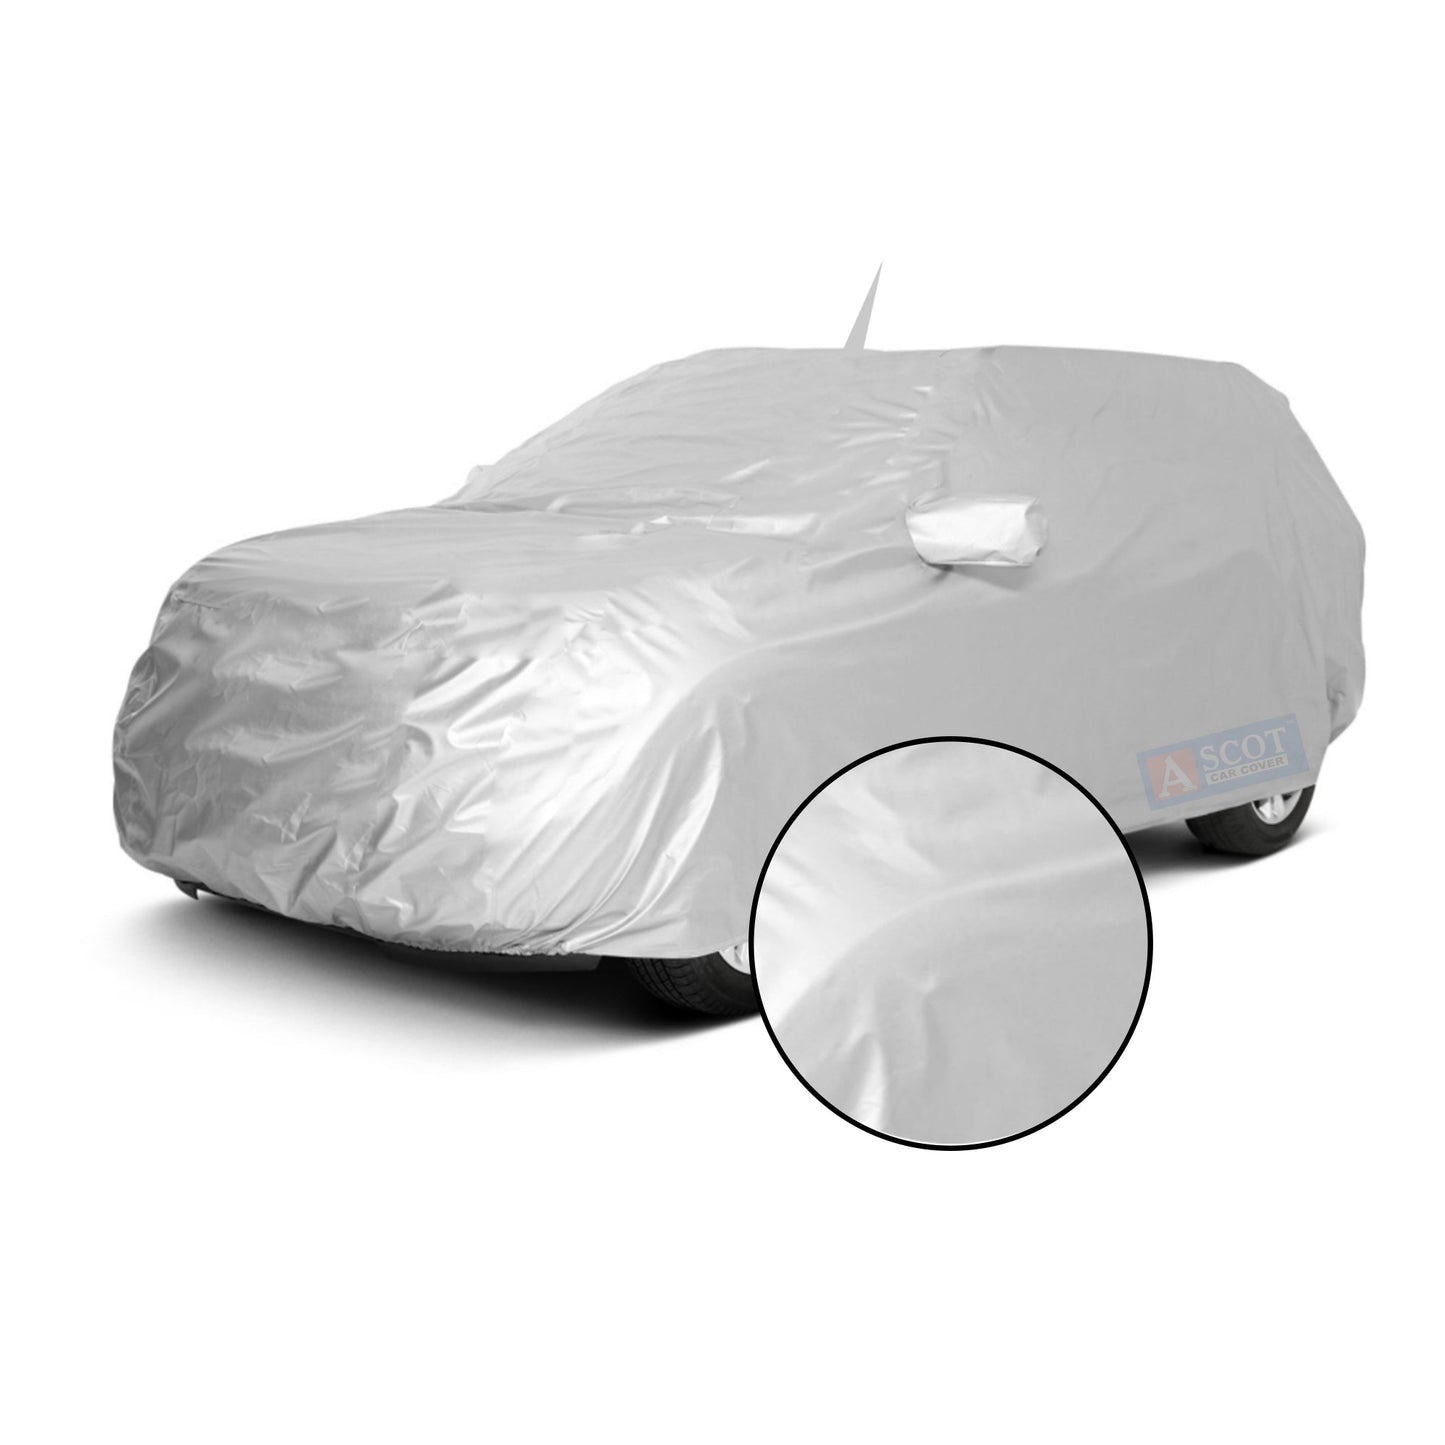 Ascot Mahindra Bolero Car Body Cover Dust Proof, Trippel Stitched